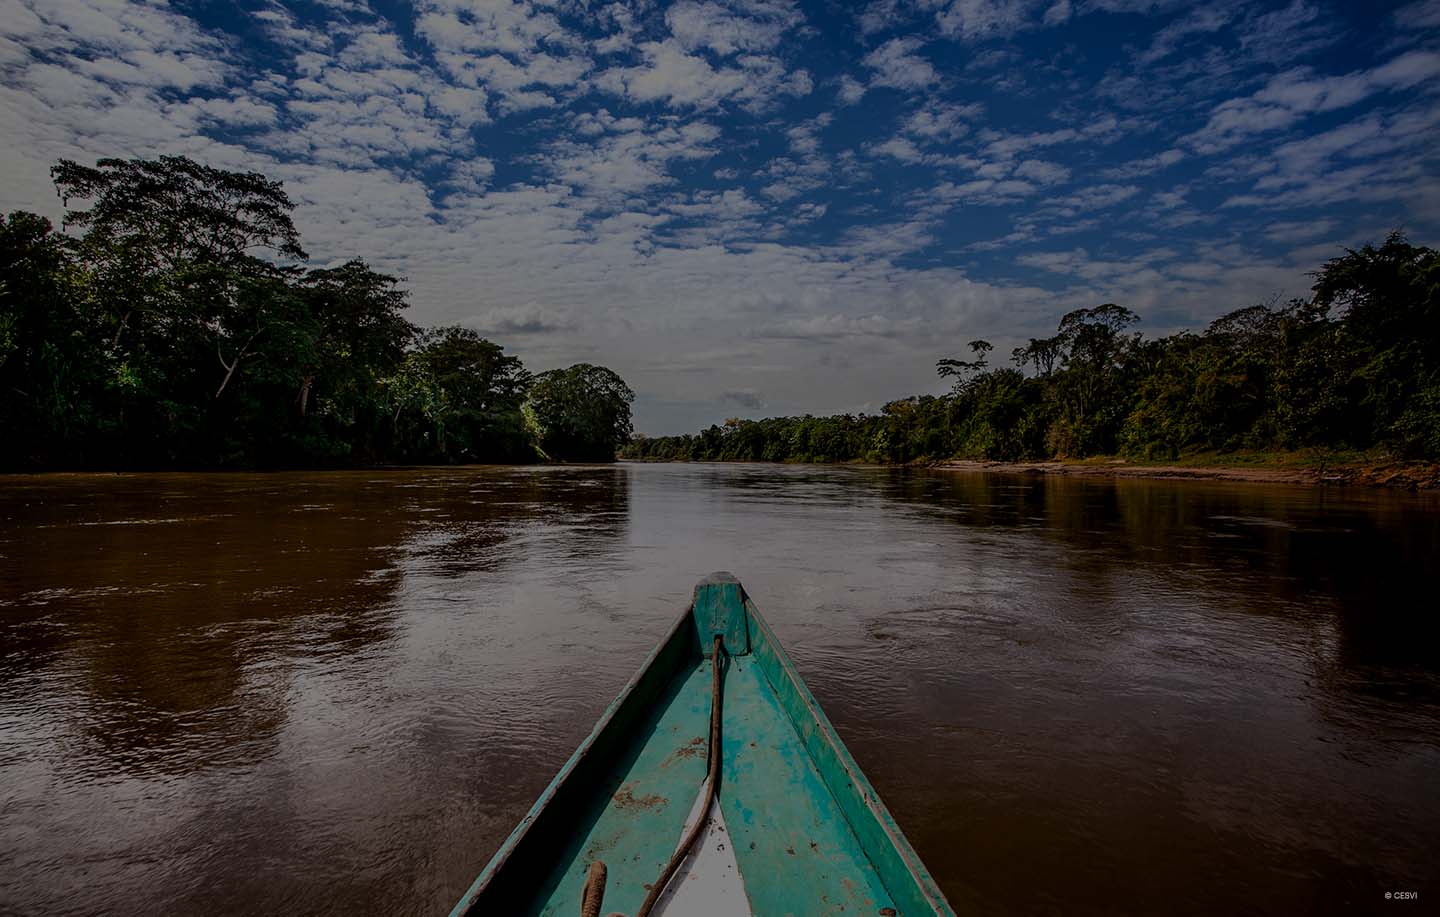 Protecting the Amazon rainforest